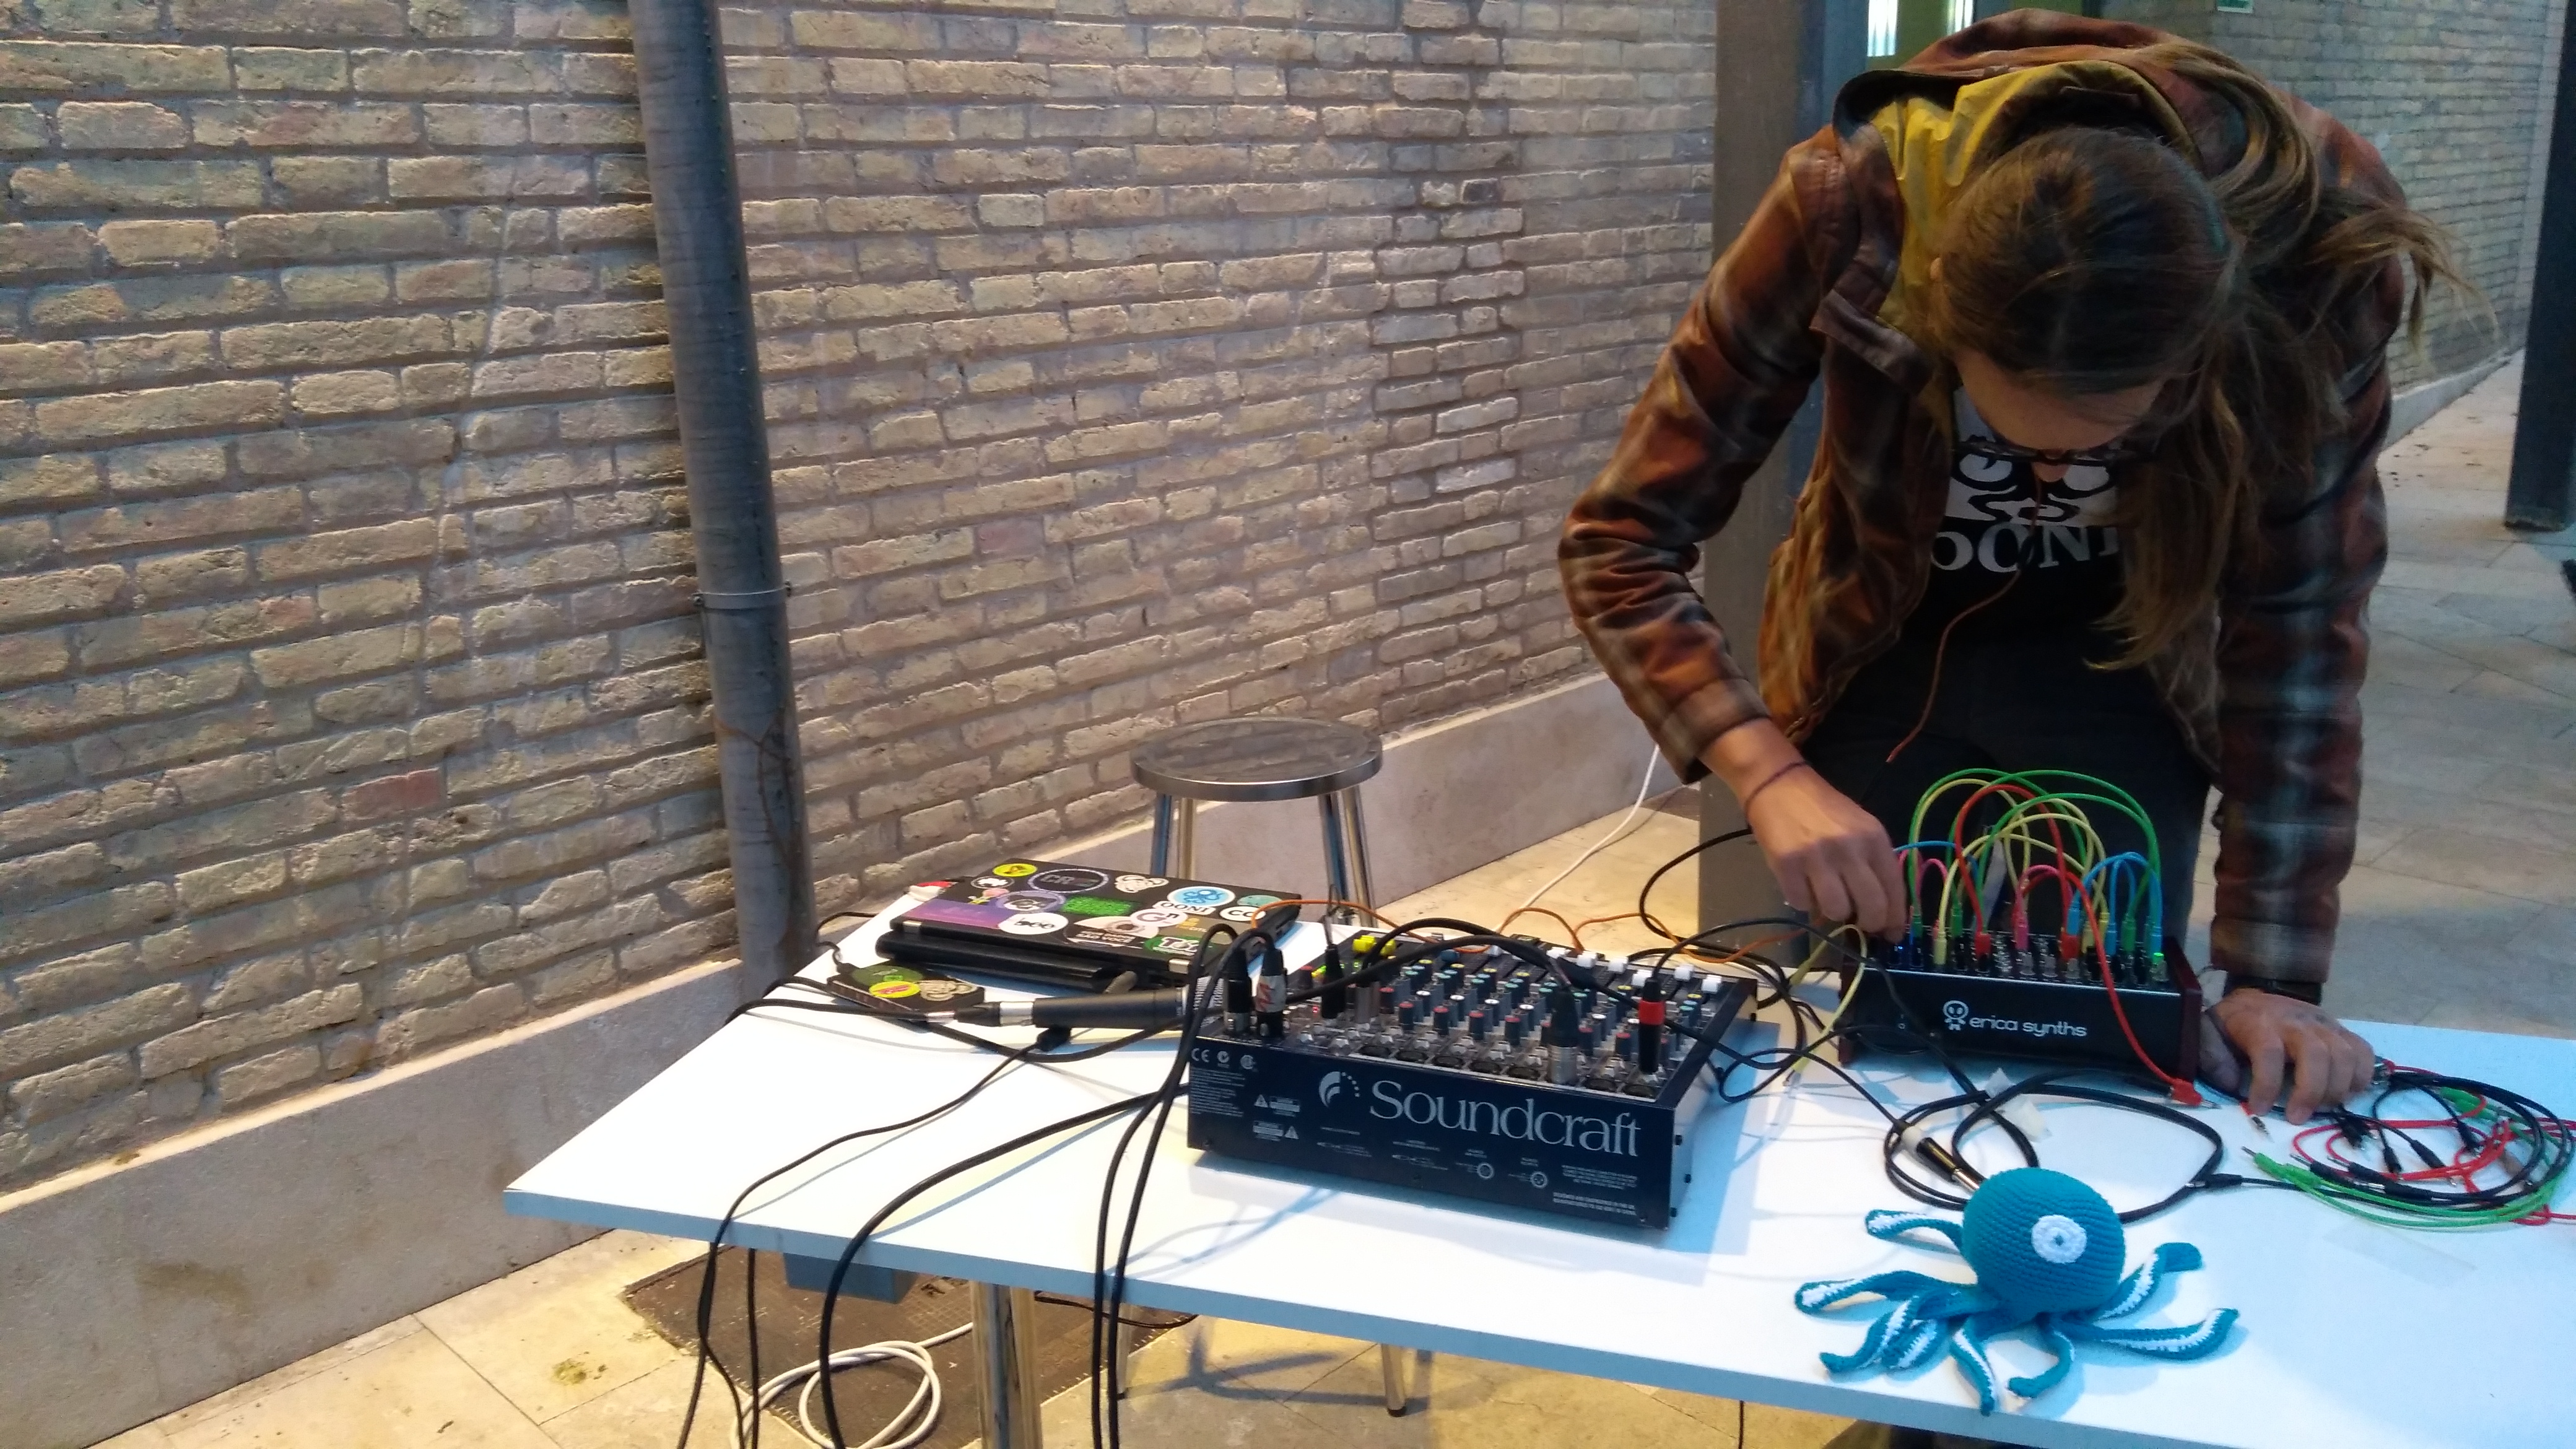 OONI's modular synthesizer performance